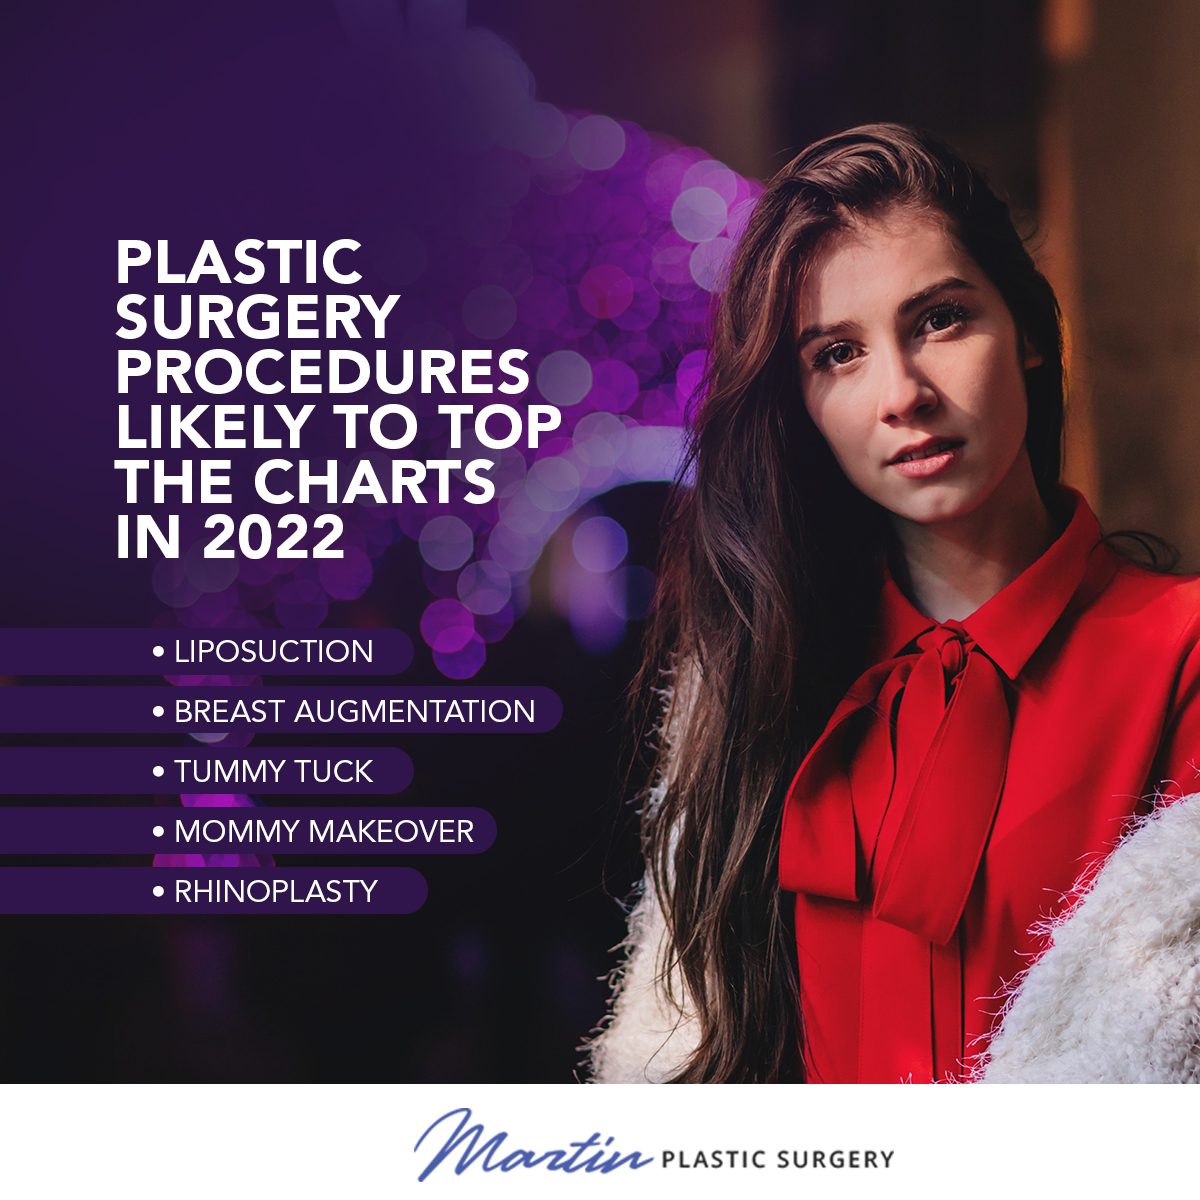 Plastic Surgery Procedures in 2022 - Infographic